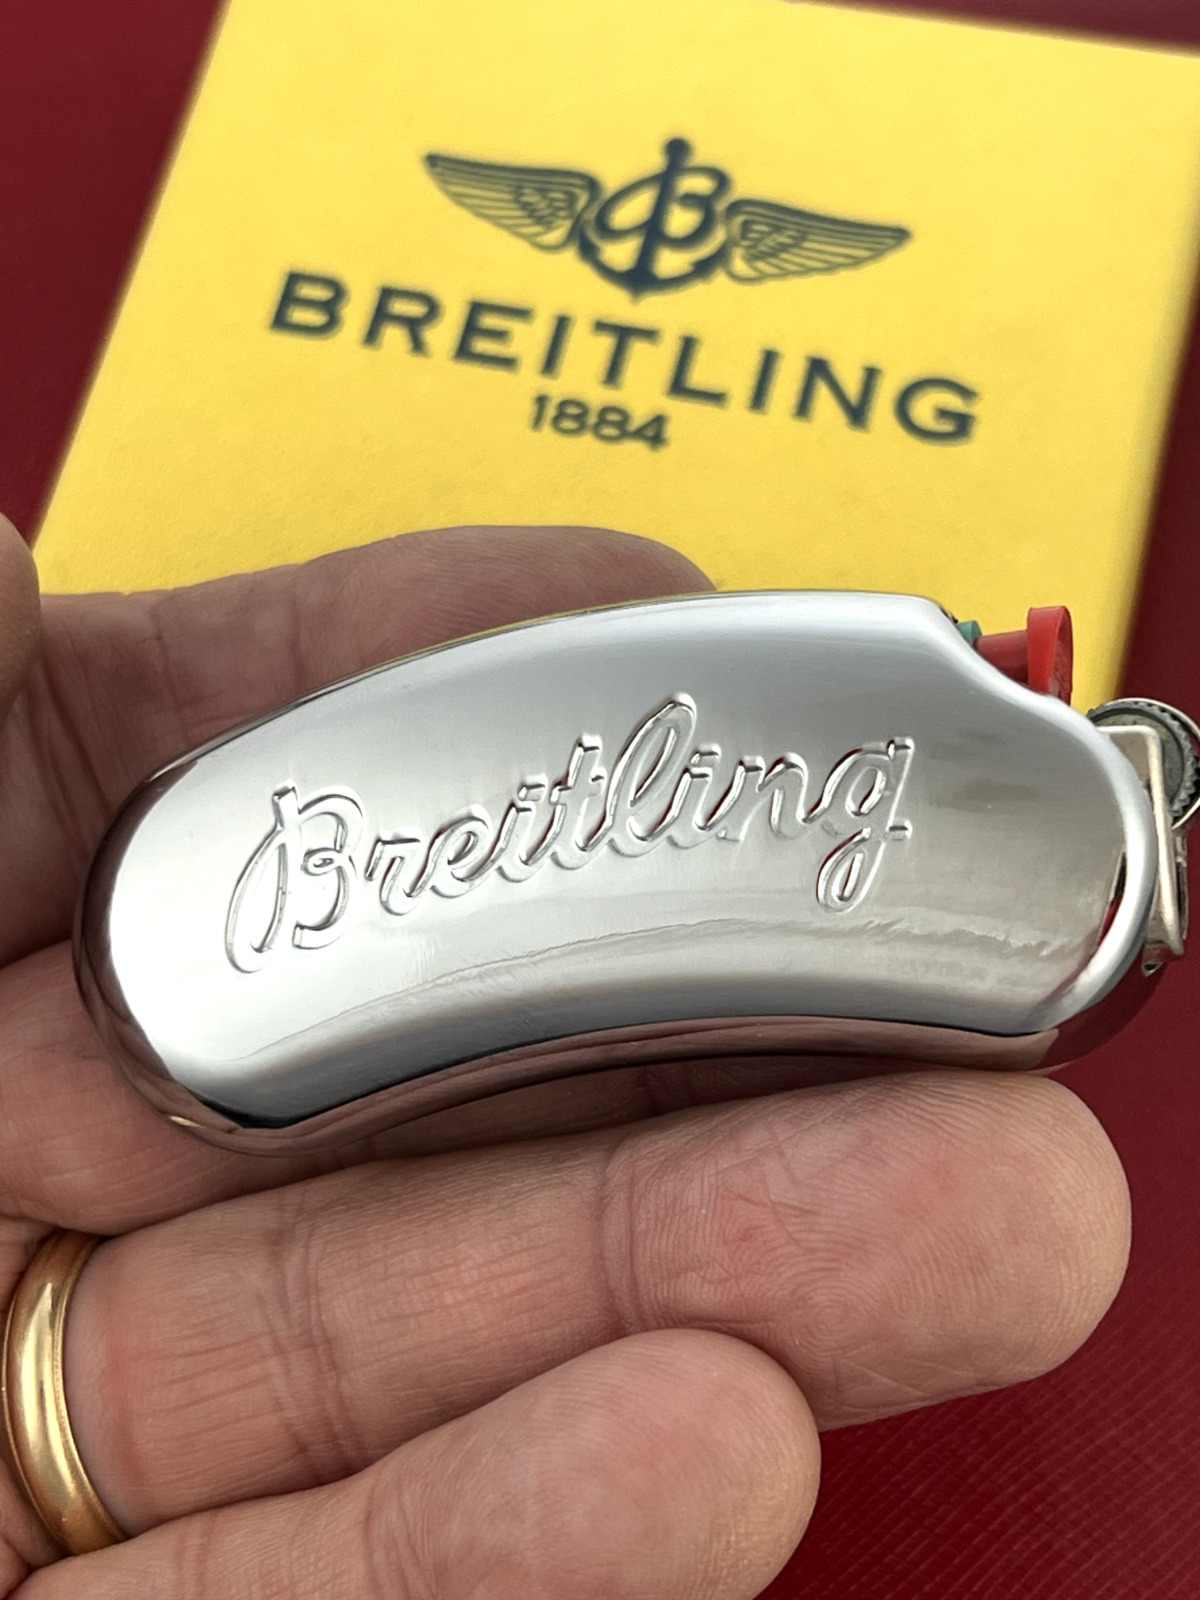 Original Authentic Breitling Lighter with Original Breitling Box - Never Used